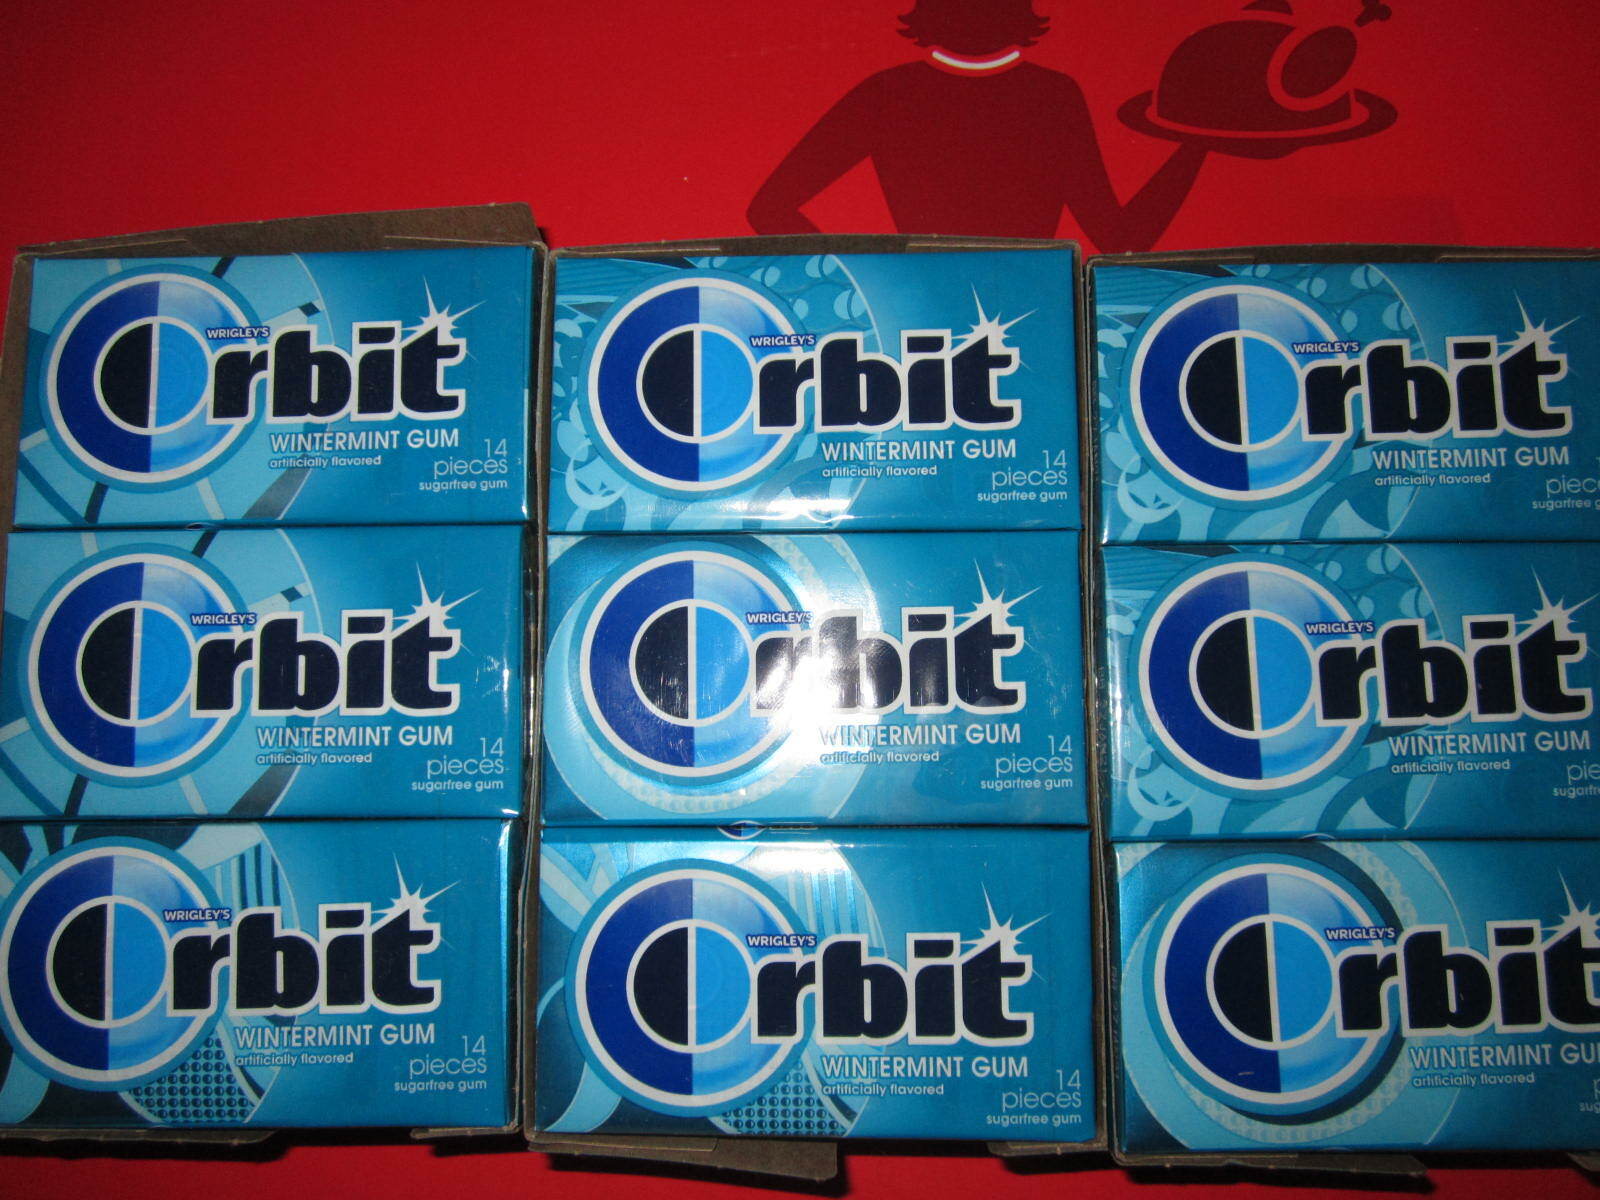 Orbit Wintermint Sugar Free Chewing Gum, 3 boxes of 12